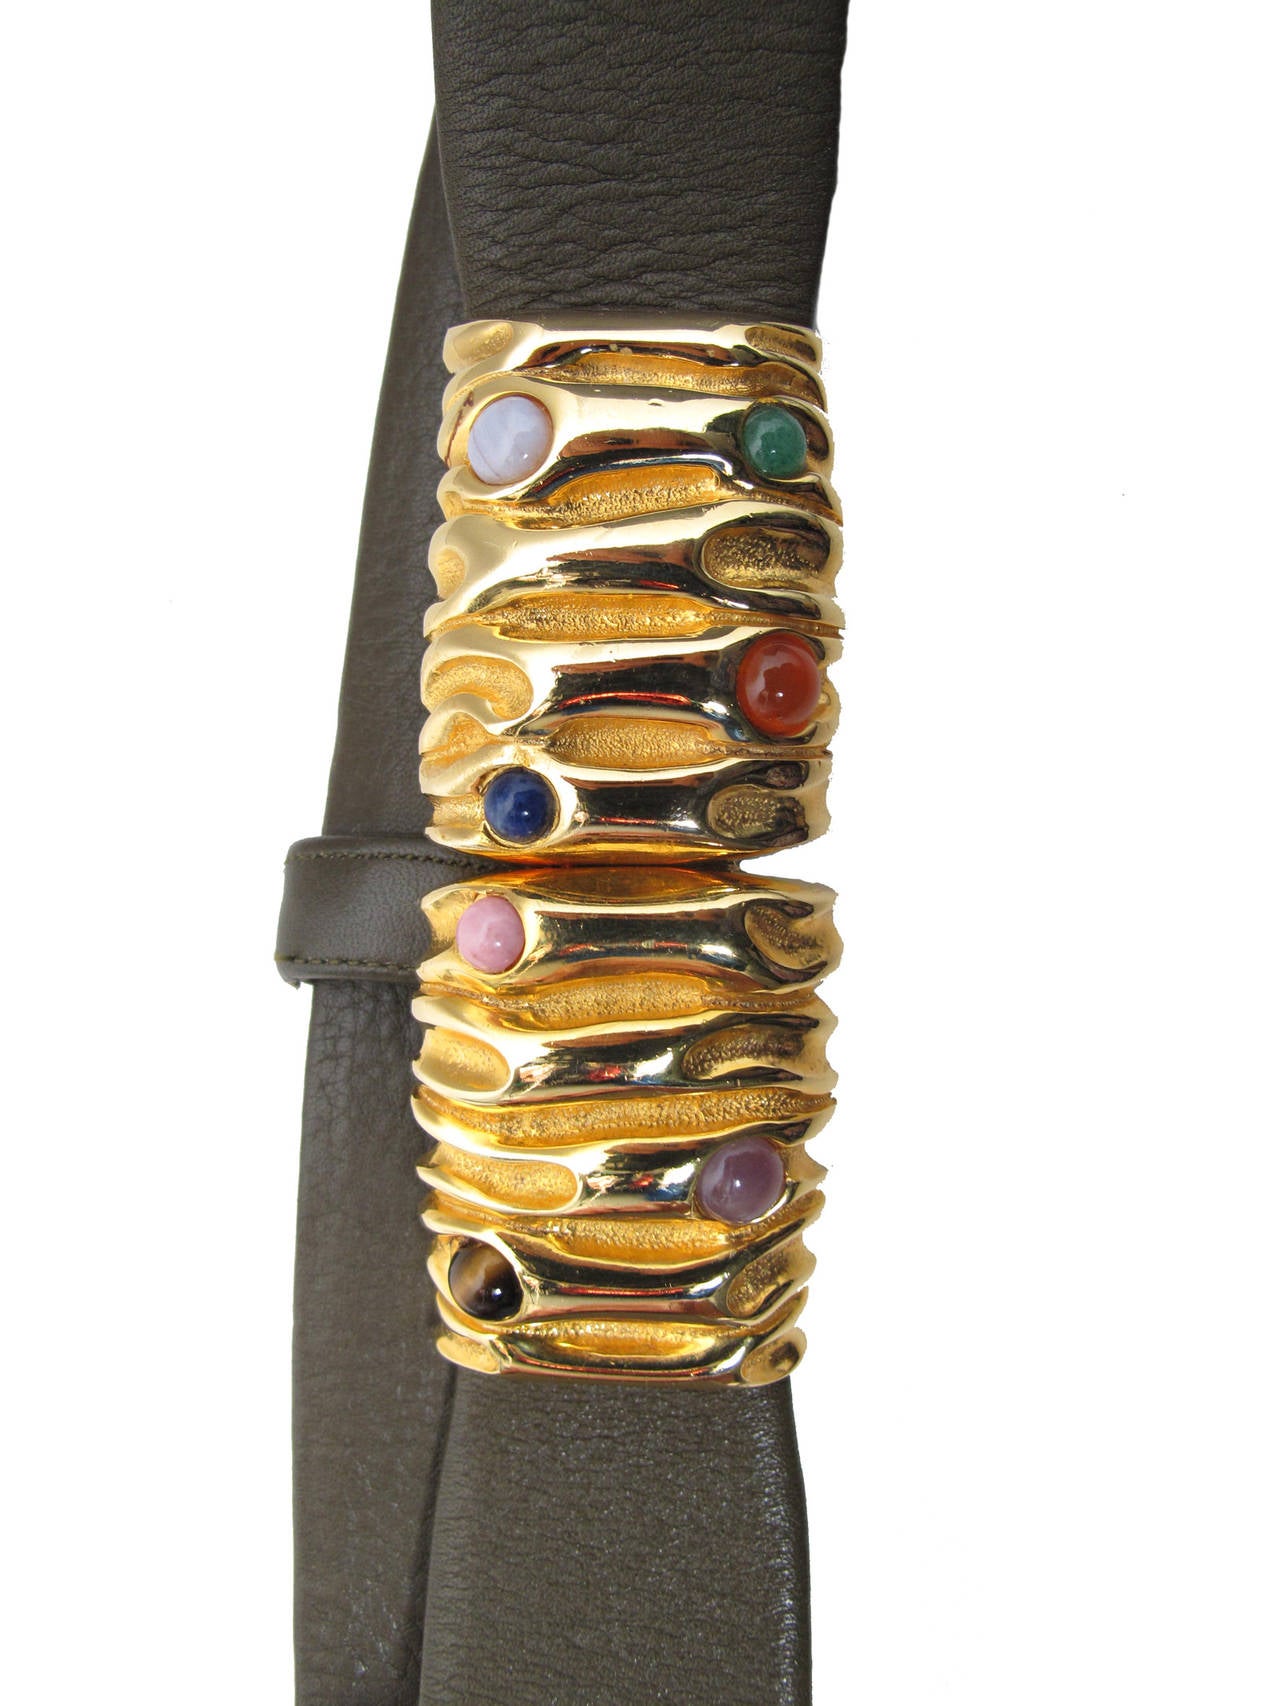 Judith Leiber brown leather adjustable waist belt with semi precious stones. 1 1/2